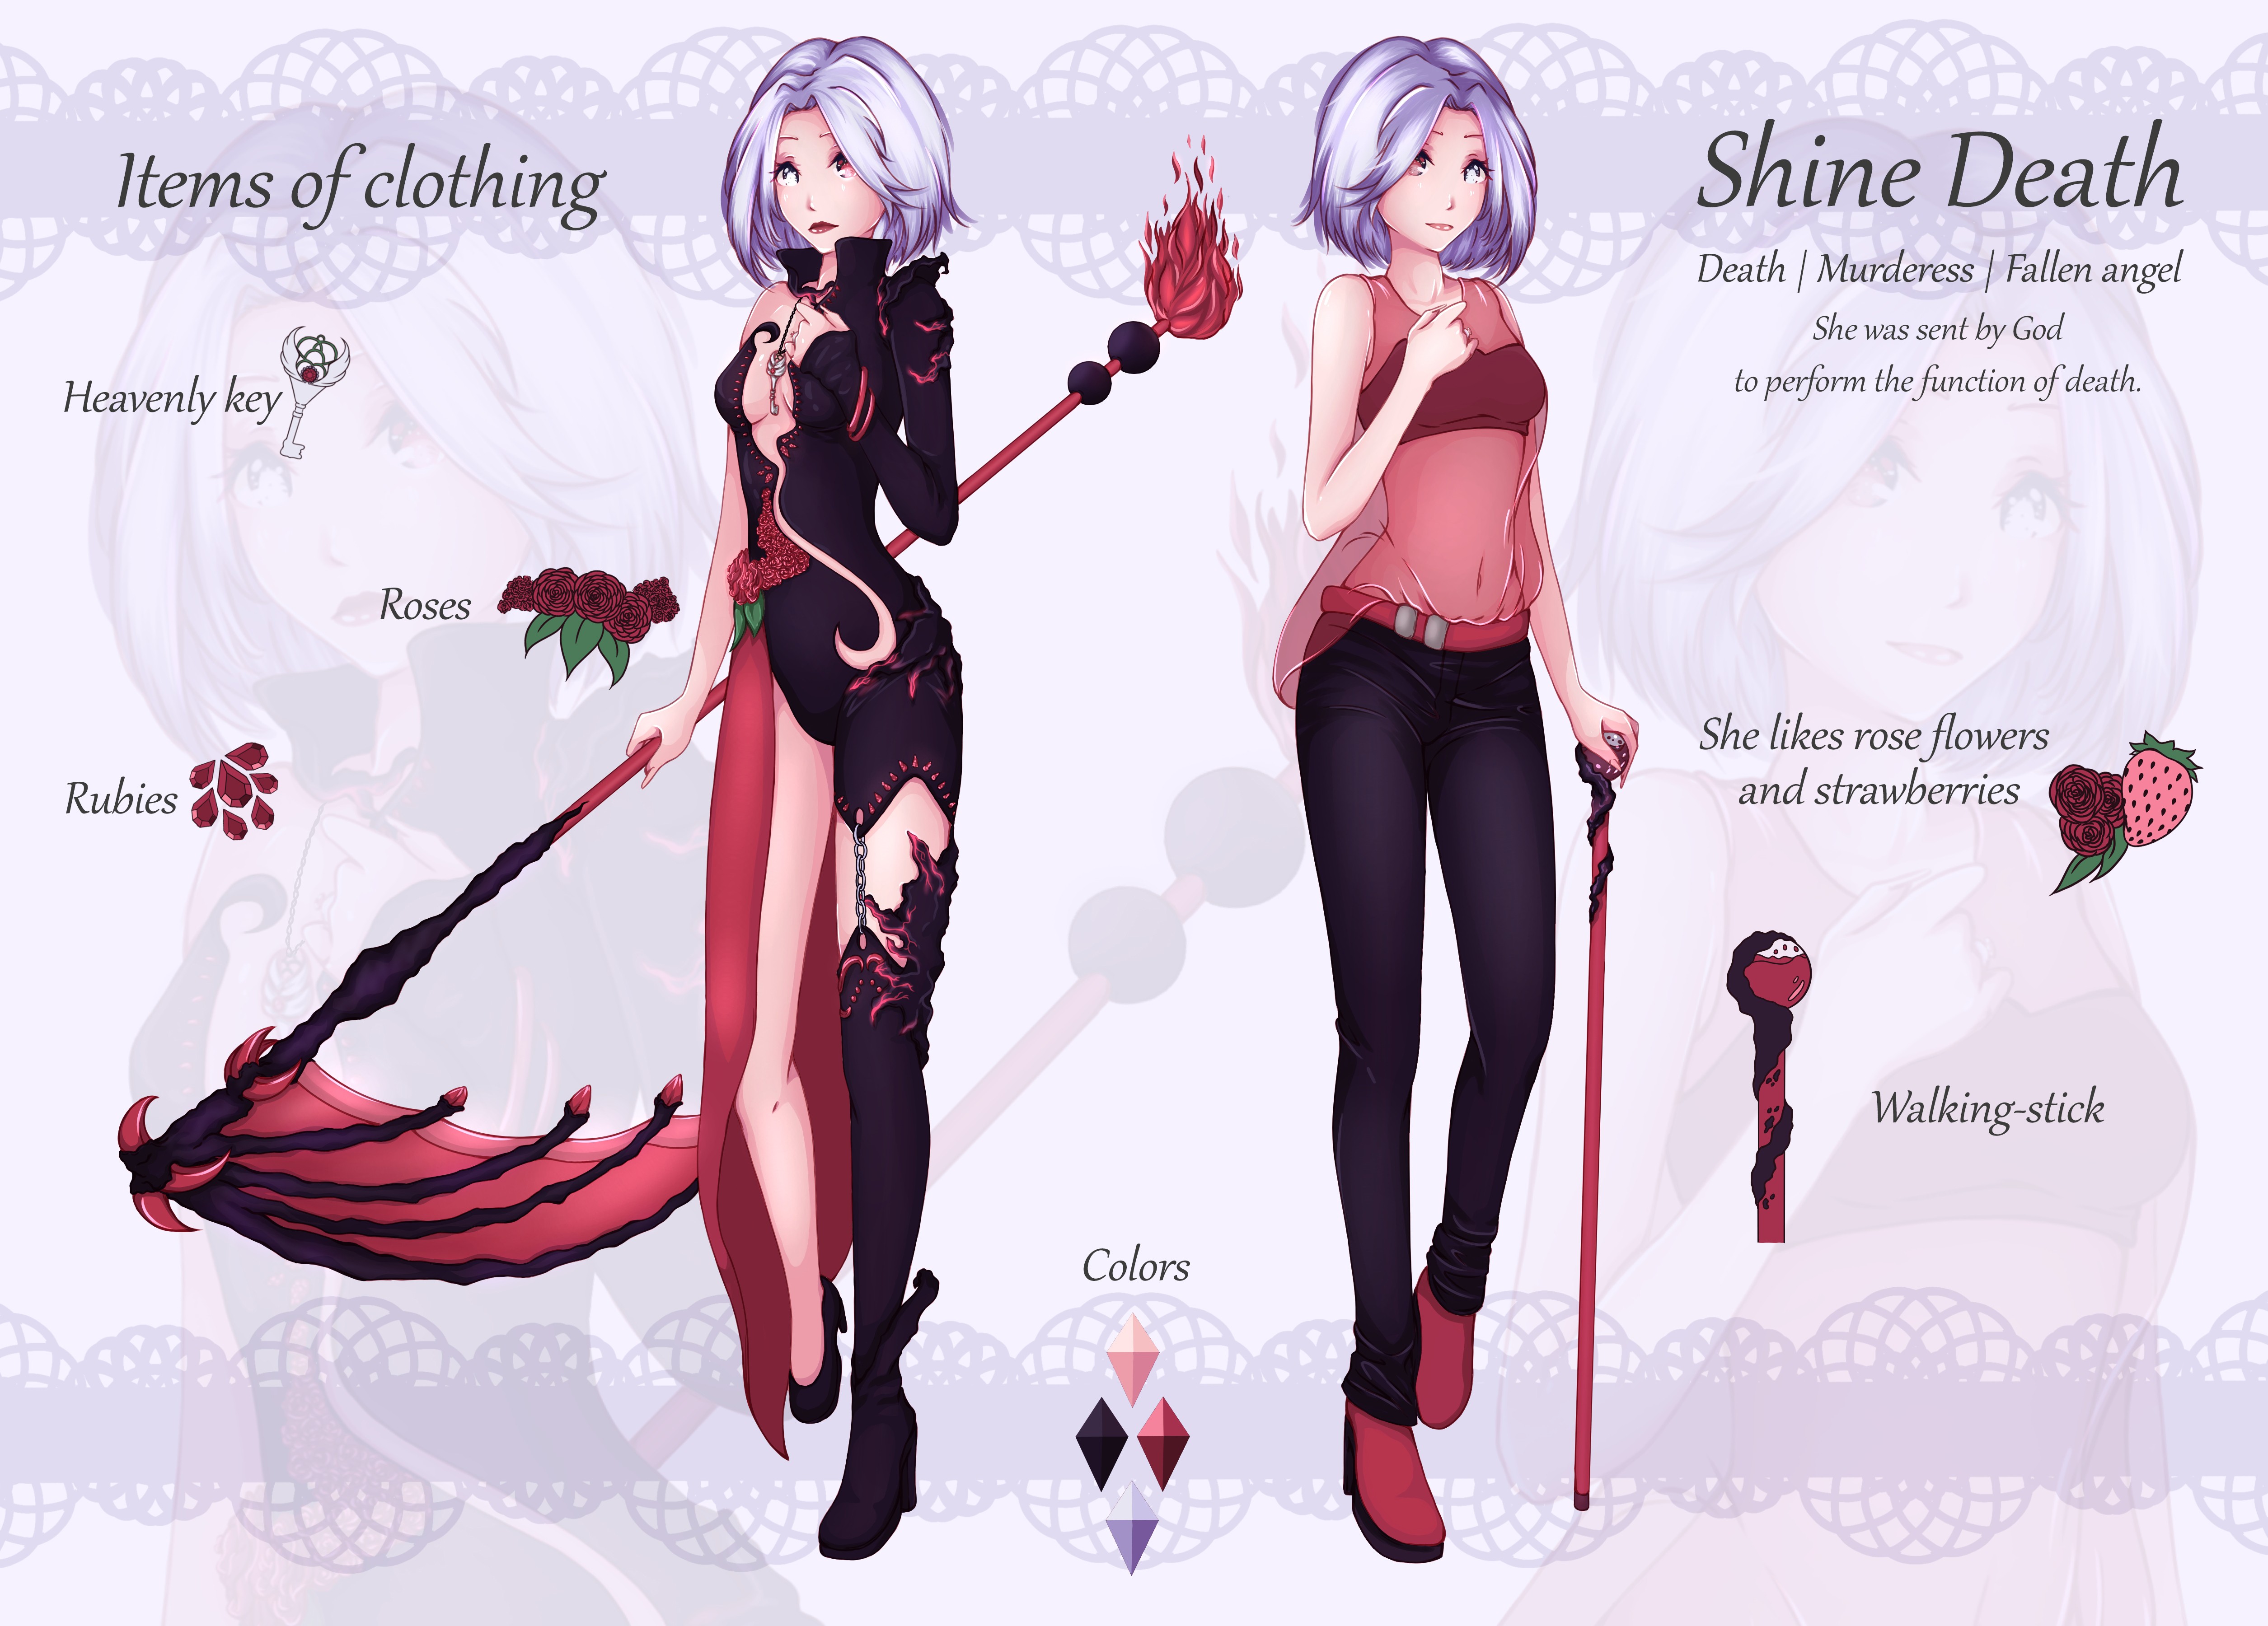 Shine Death - character design